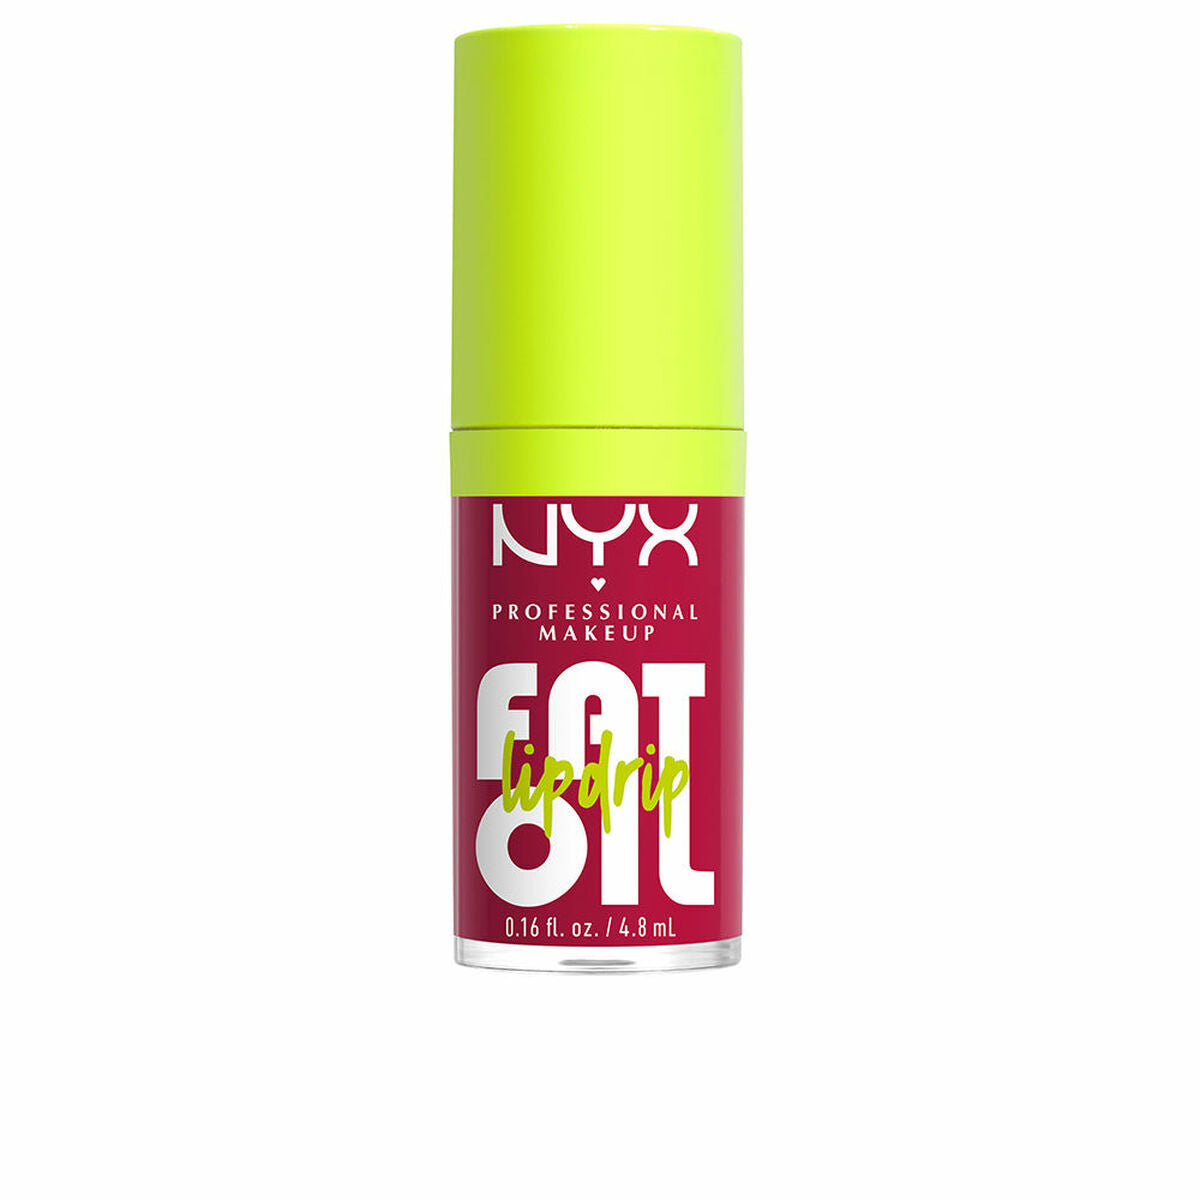 Läppolja Nyx Fat Oil Nº 05 Newsfeed 4,8 ml